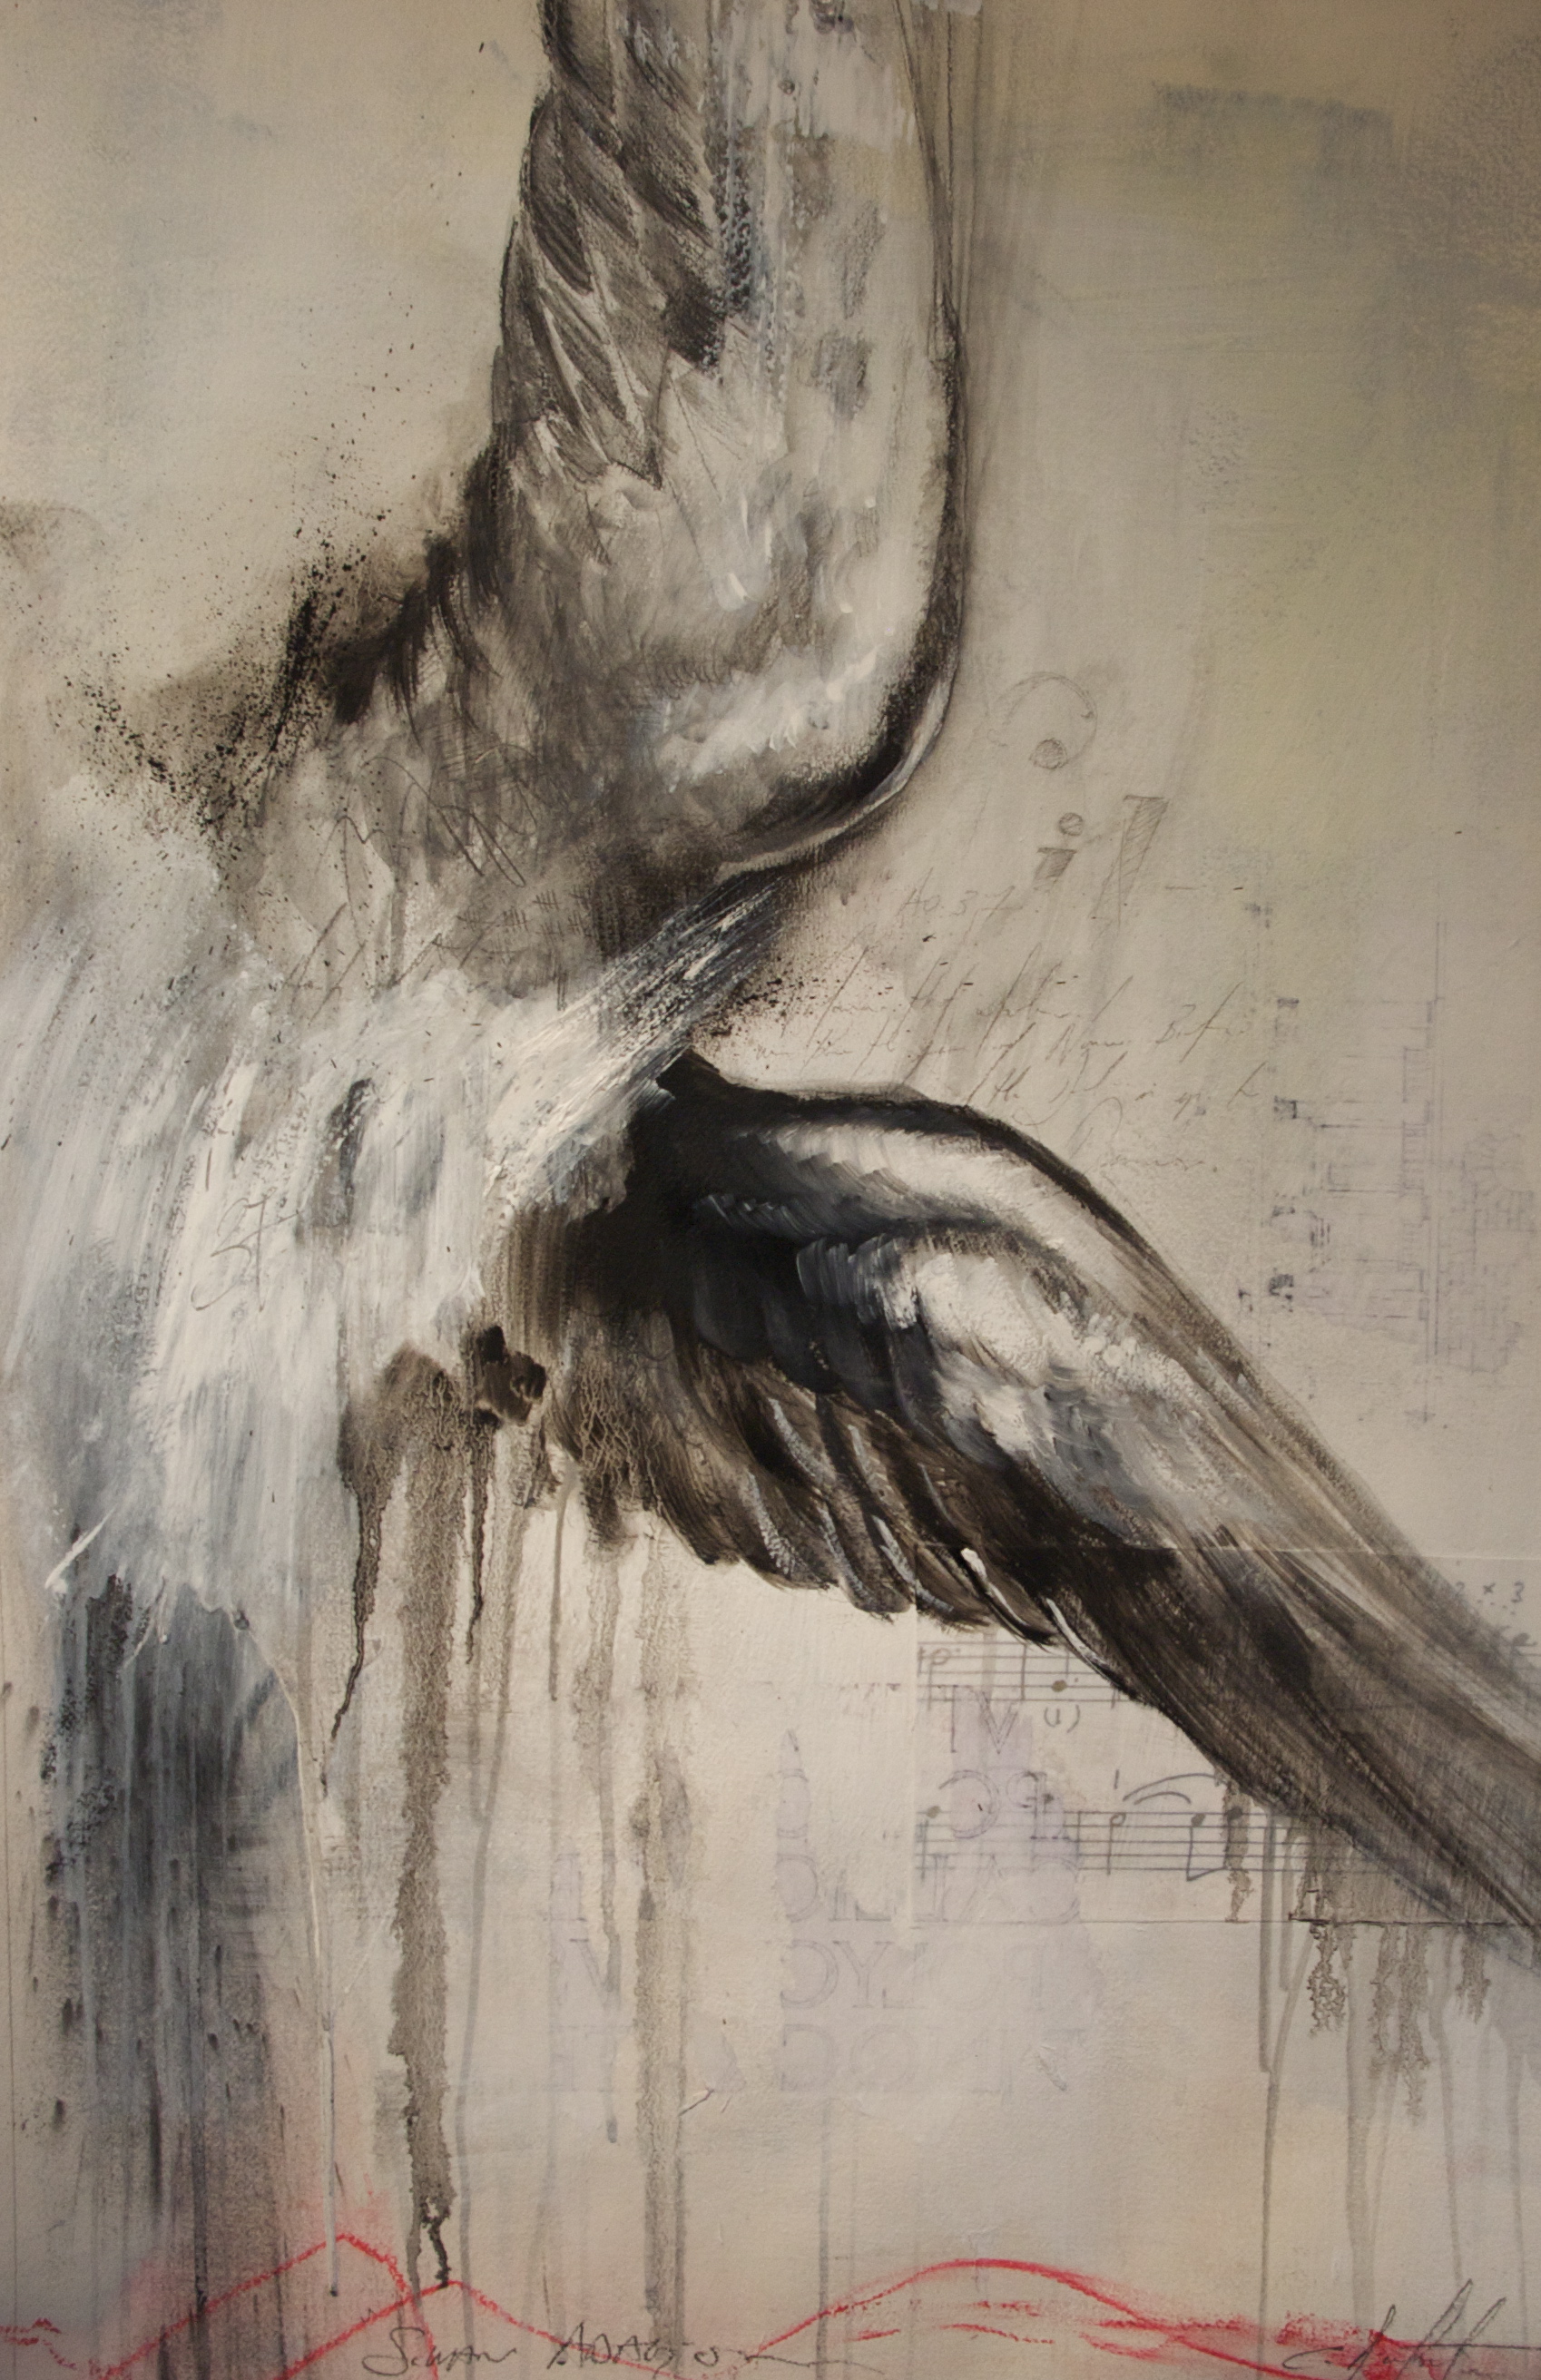 Swan Adagio. mixed media on Paper 17.5"x29" 2010